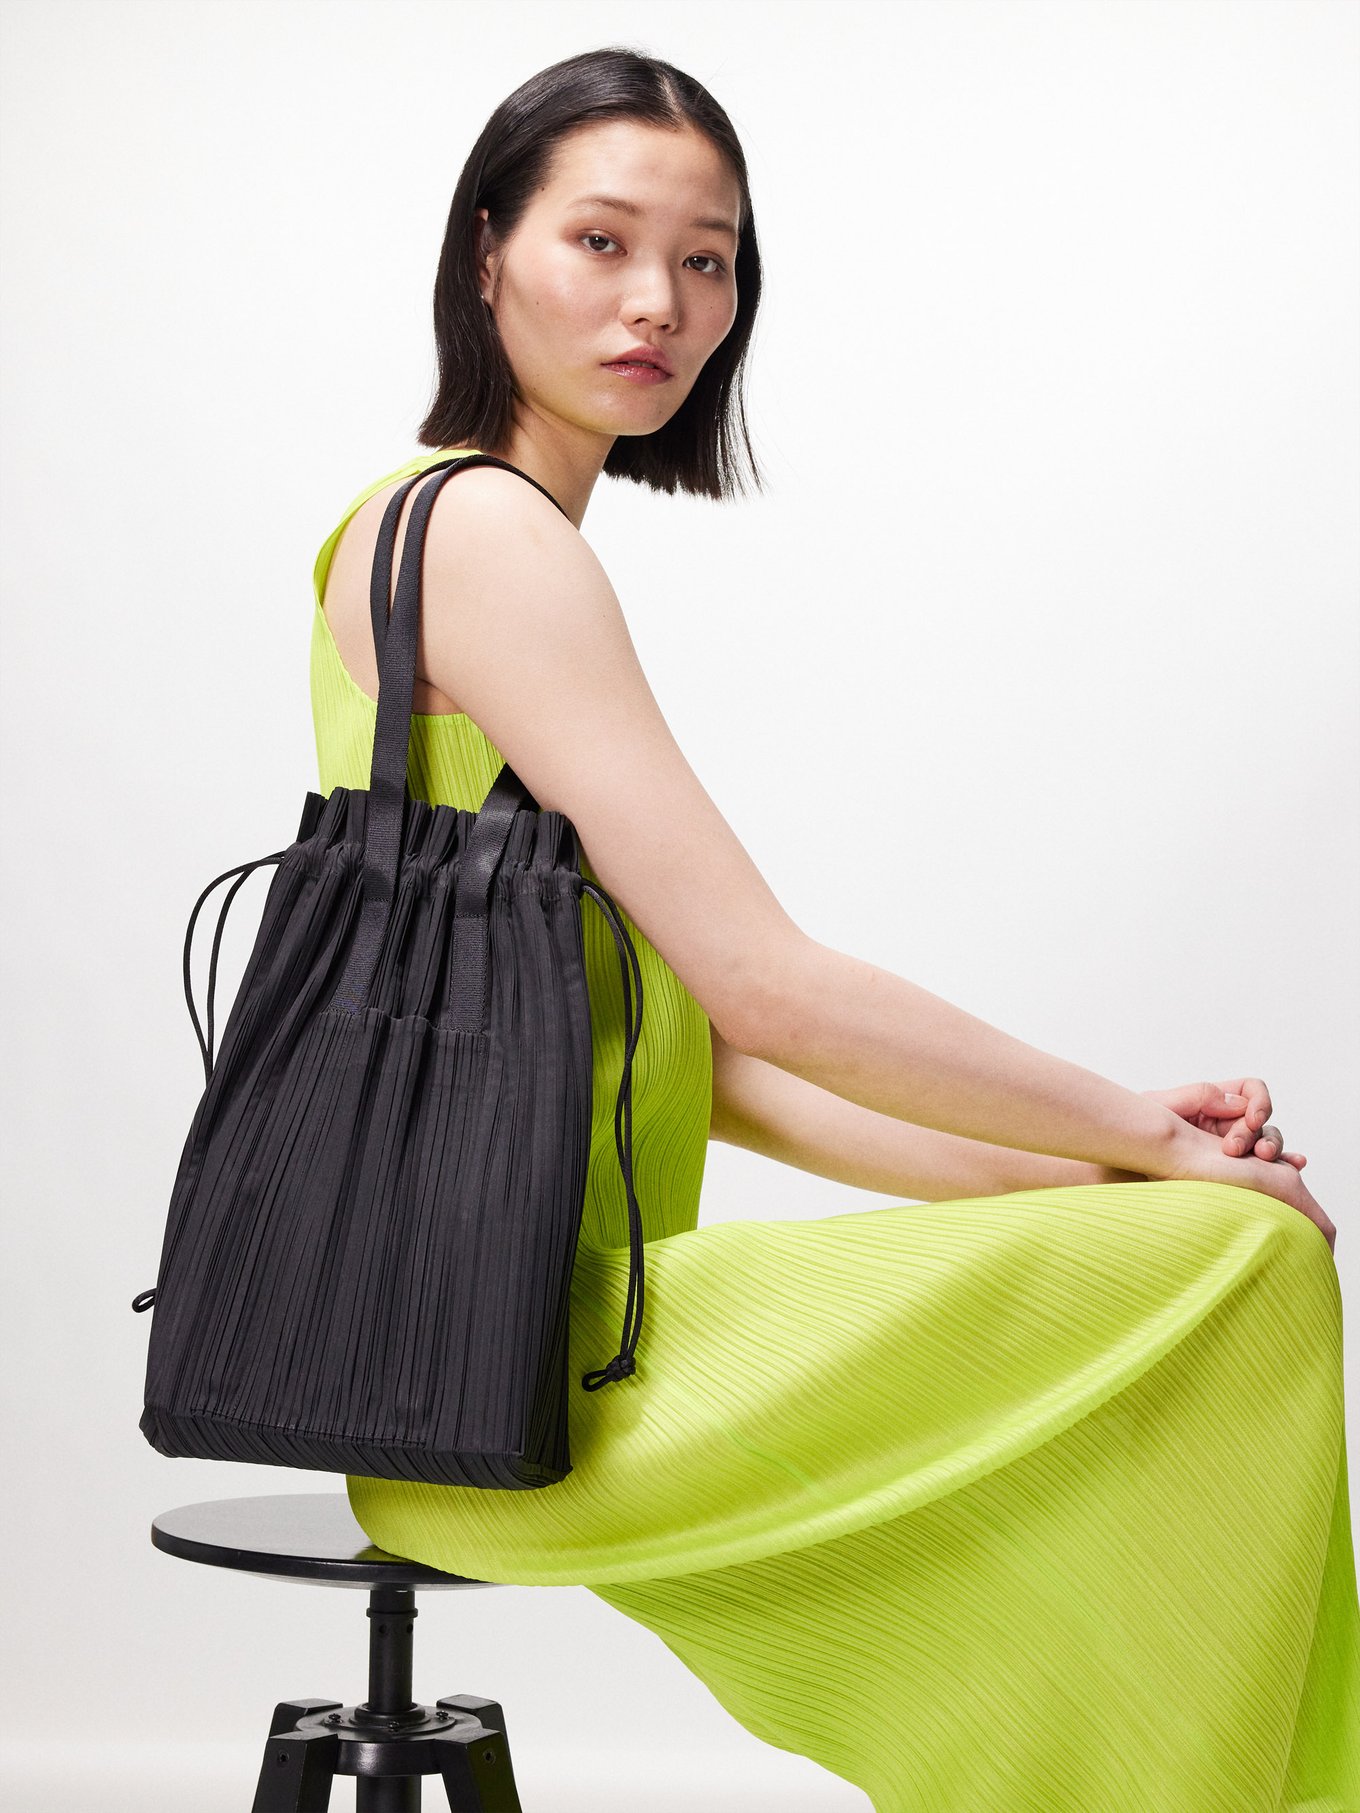 Black Pleats large technical-pleated tote bag, Pleats Please Issey Miyake